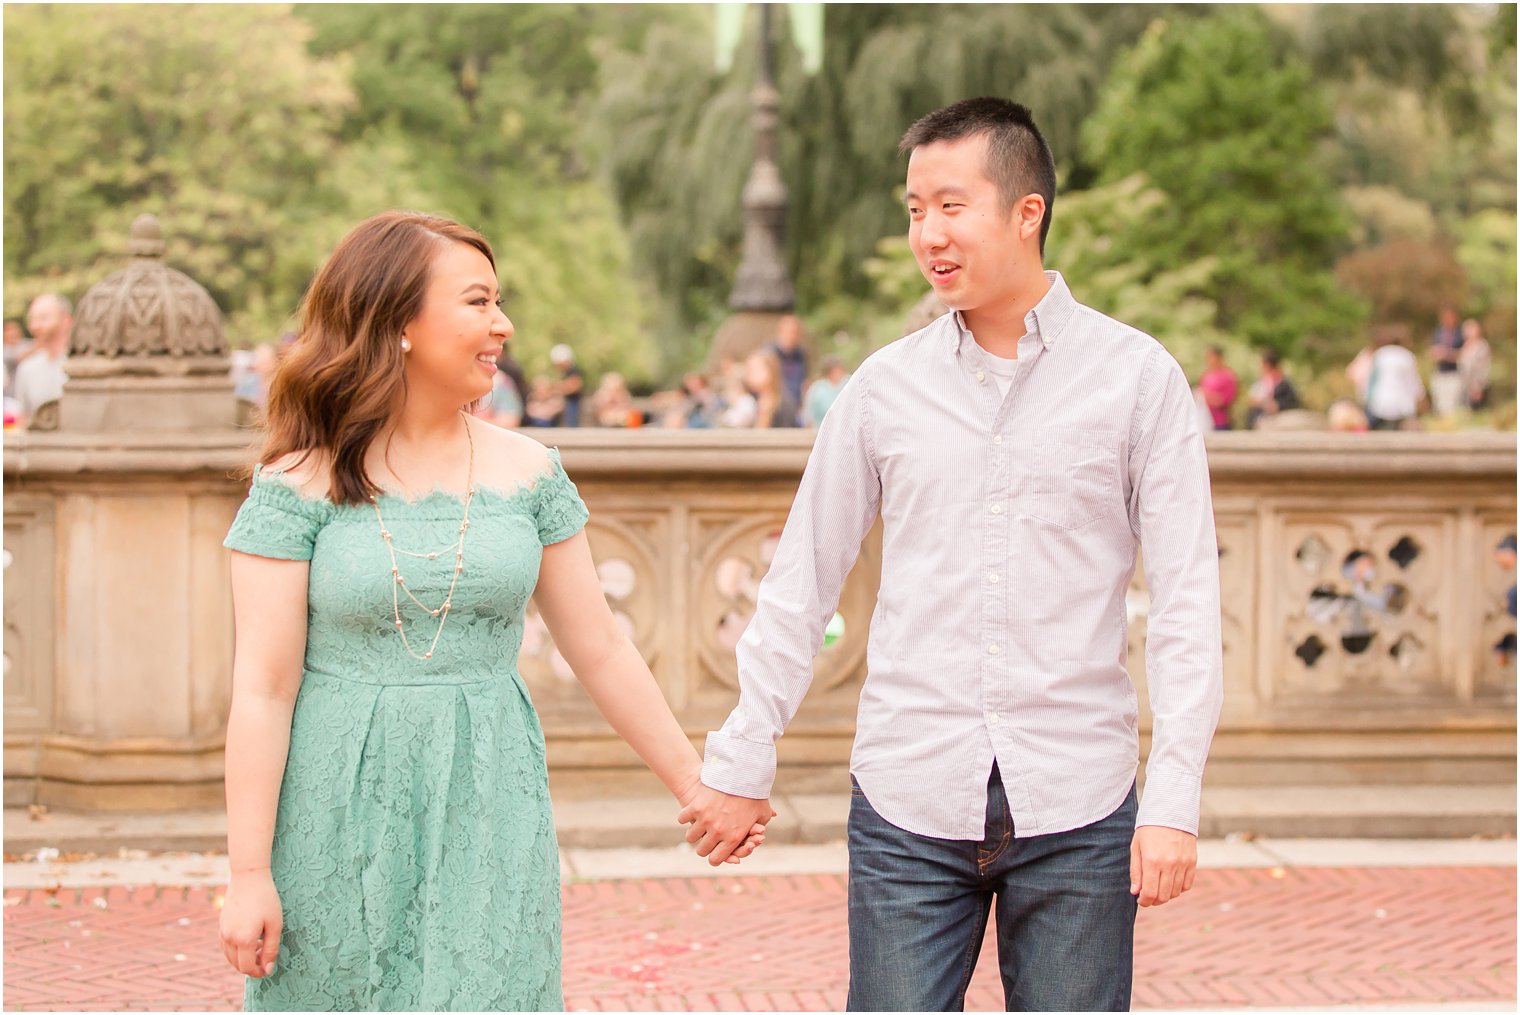 Engagement photos at Bethesda Fountain by Idalia Photography